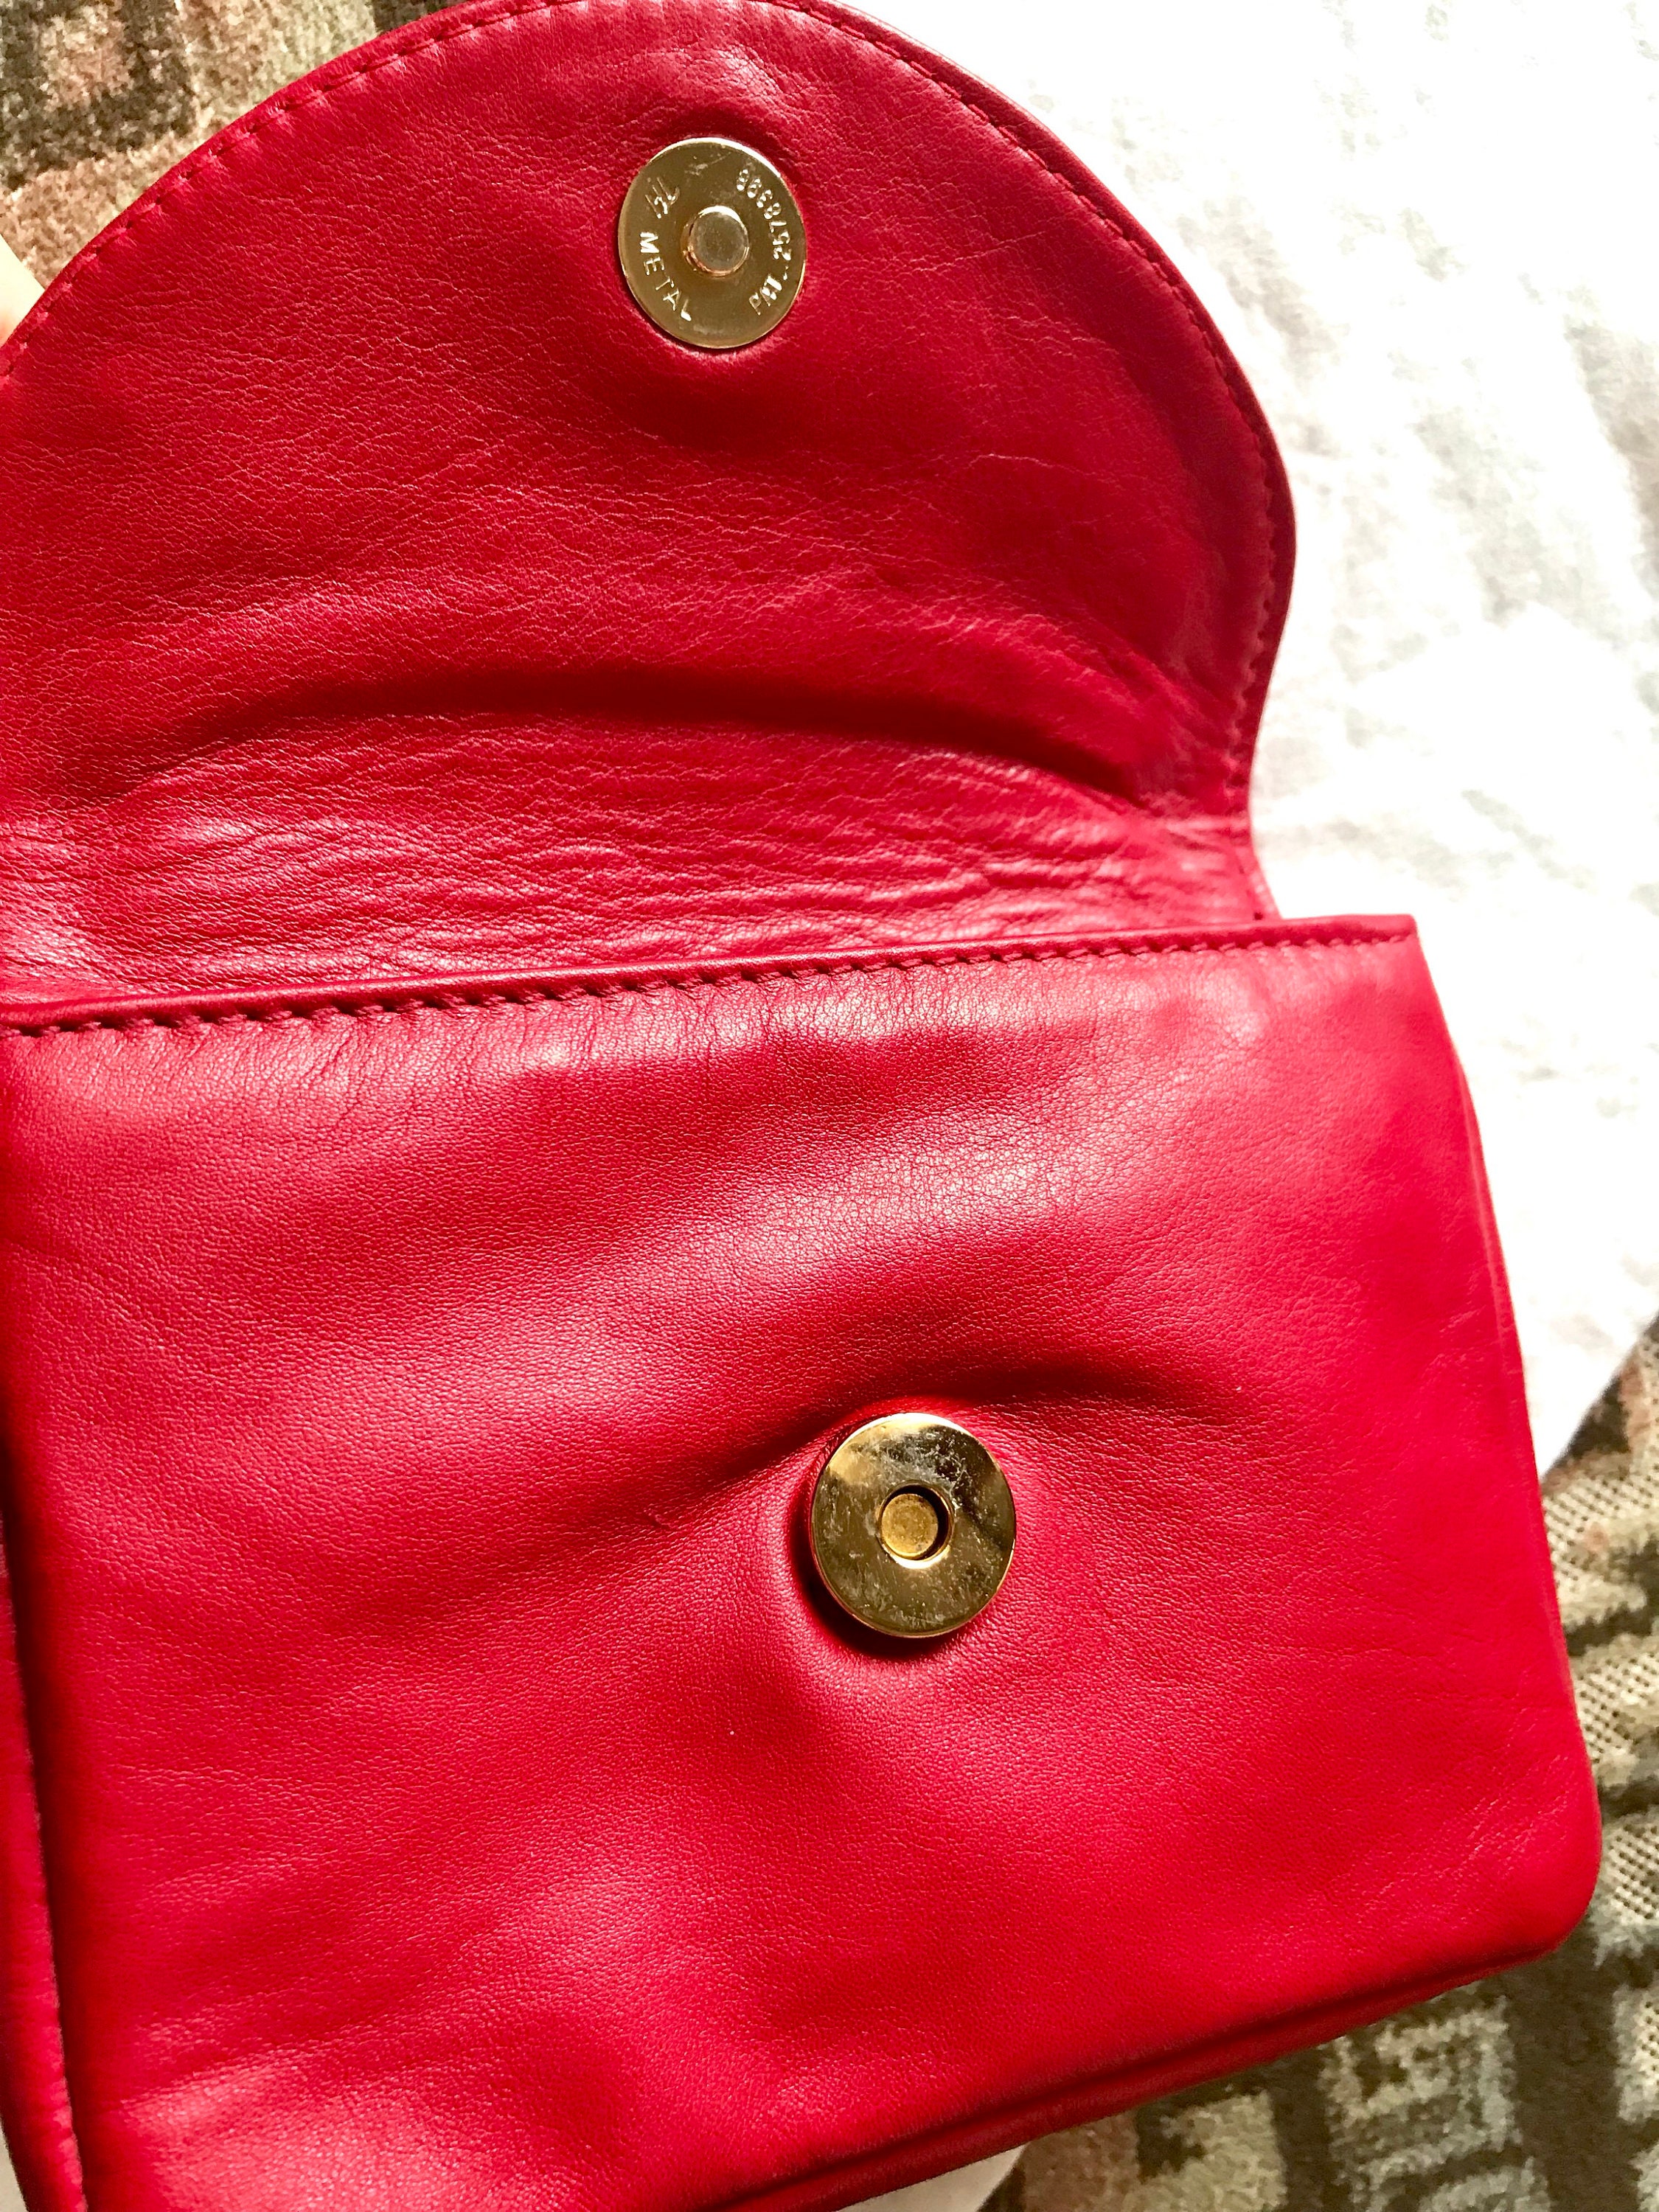 Vintage CHANEL Red Fanny Pack Leather Belt Bag With 